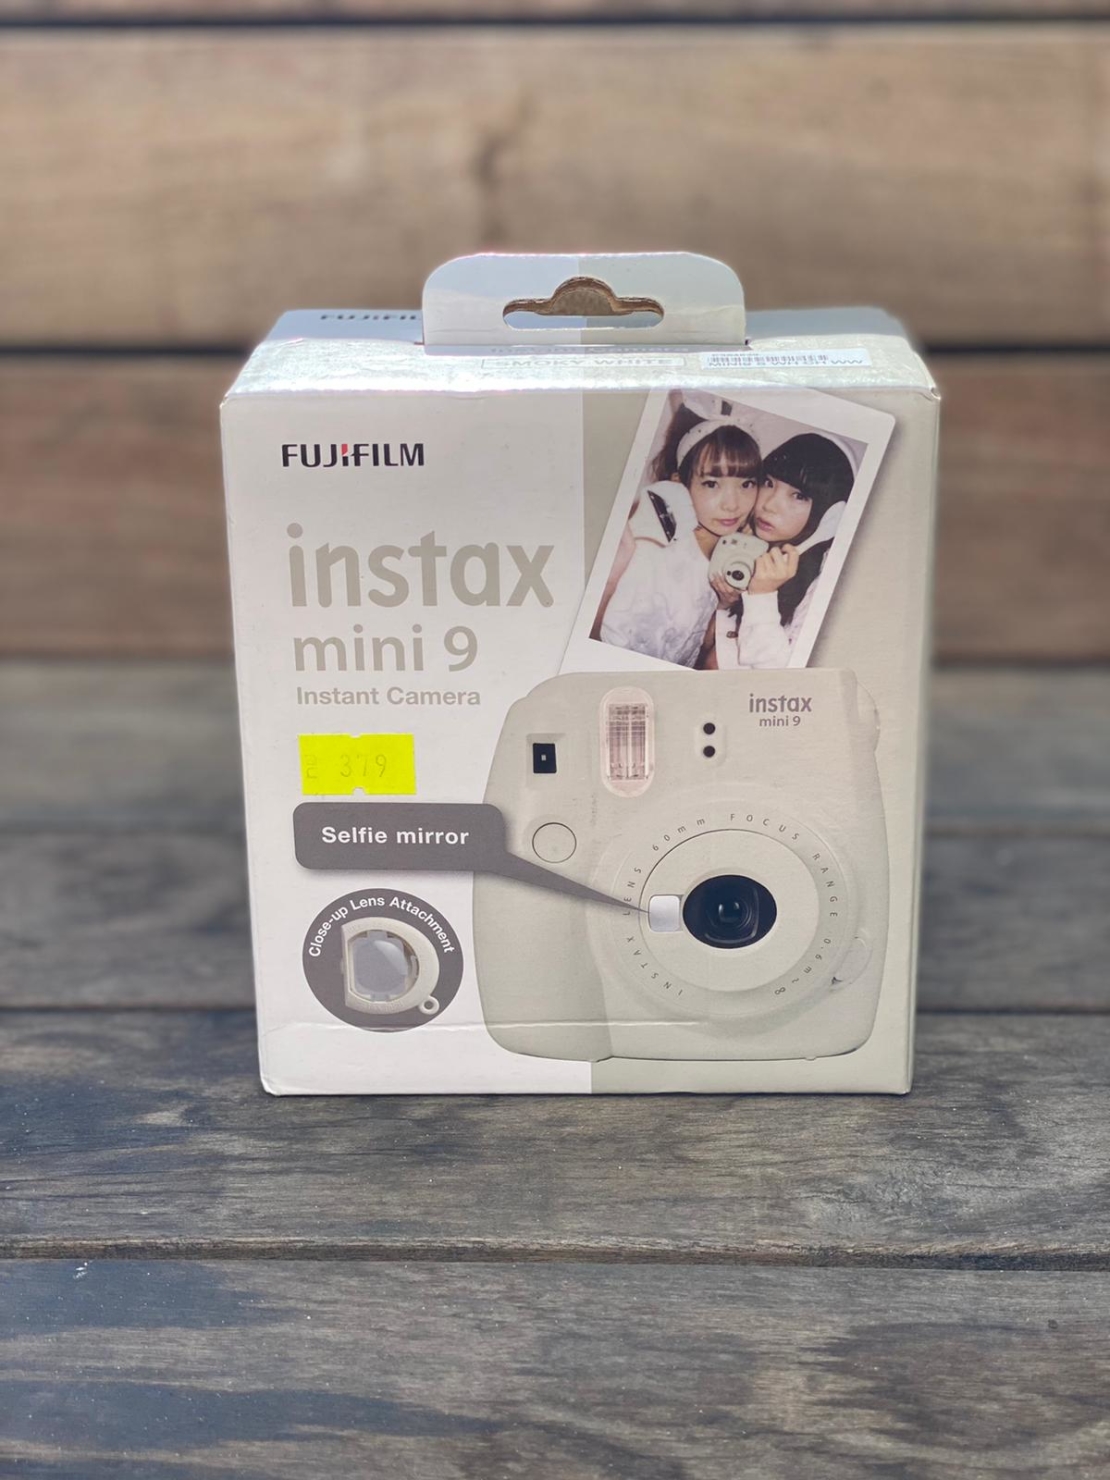 ‏Instax mini 9-מצלמה אינסטקס מיני 9